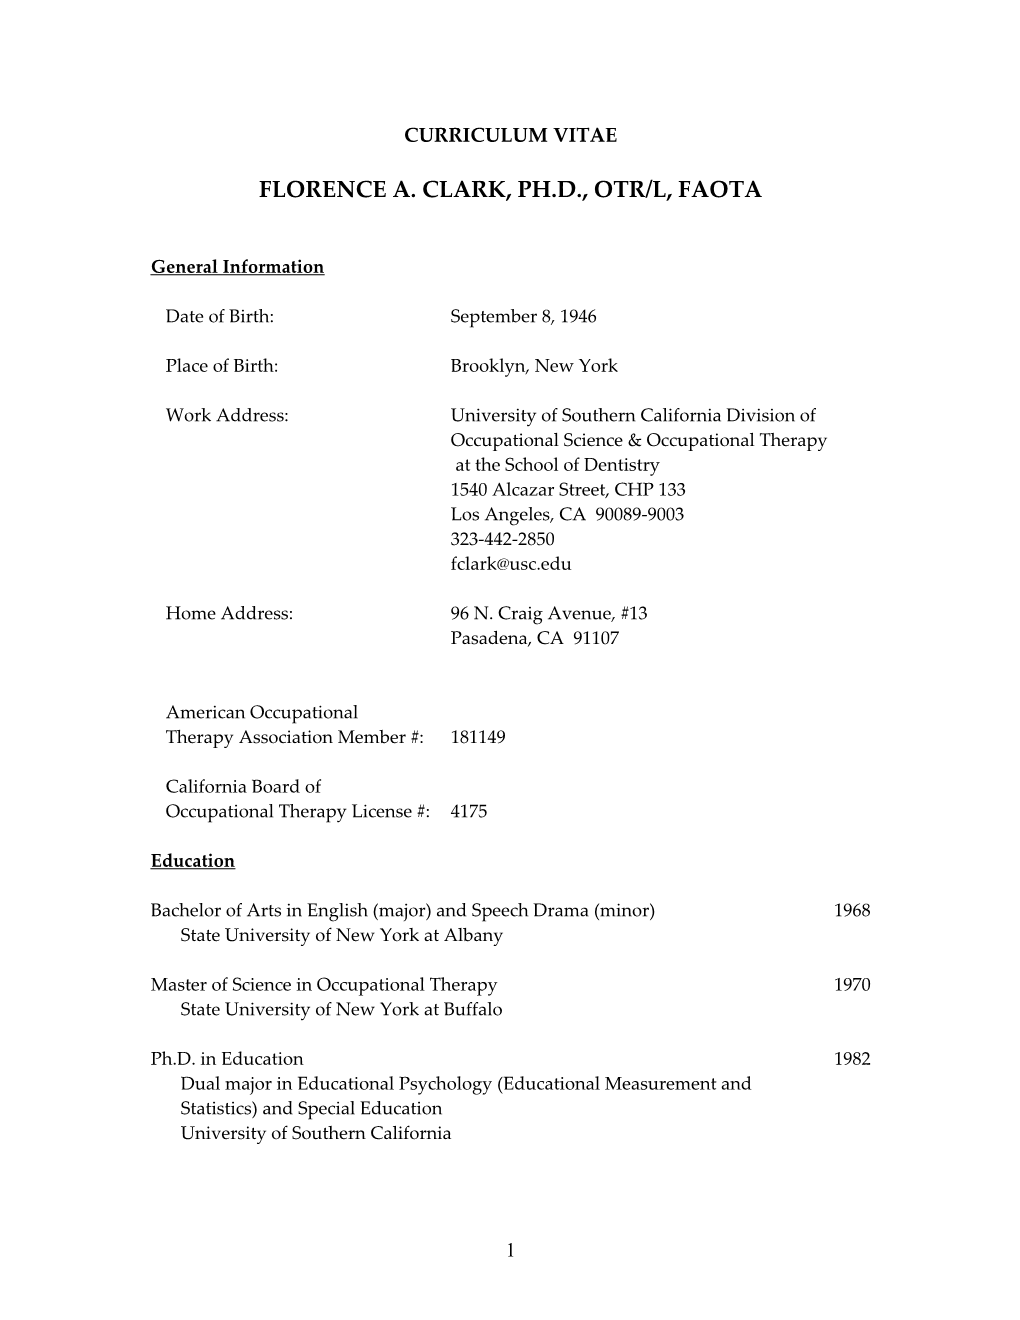 Florence A. Clark, Ph.D., Otr/L, Faota